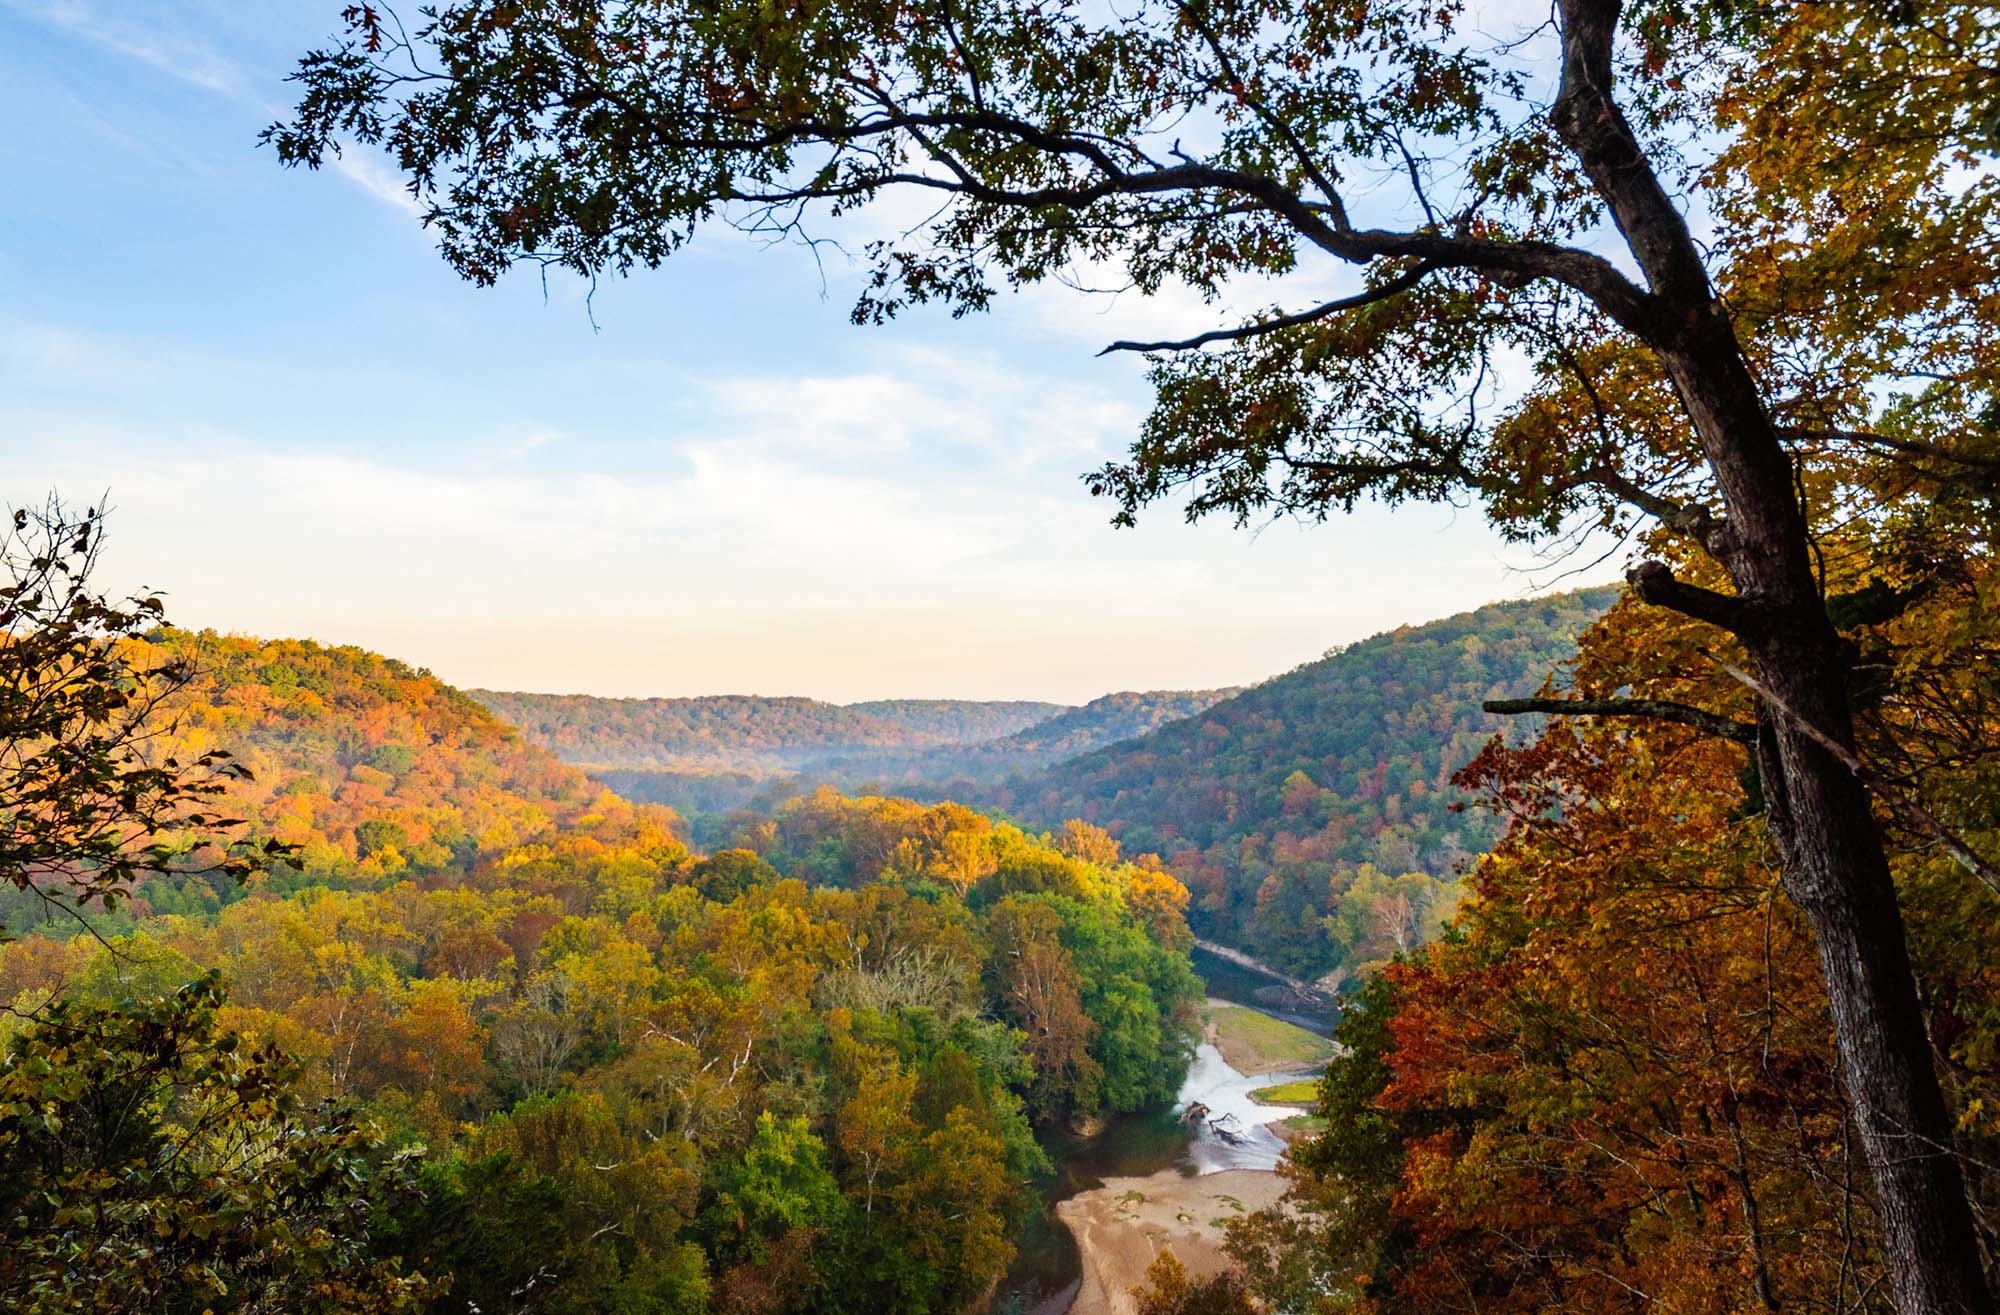 A river runs through a valley during fall colors.